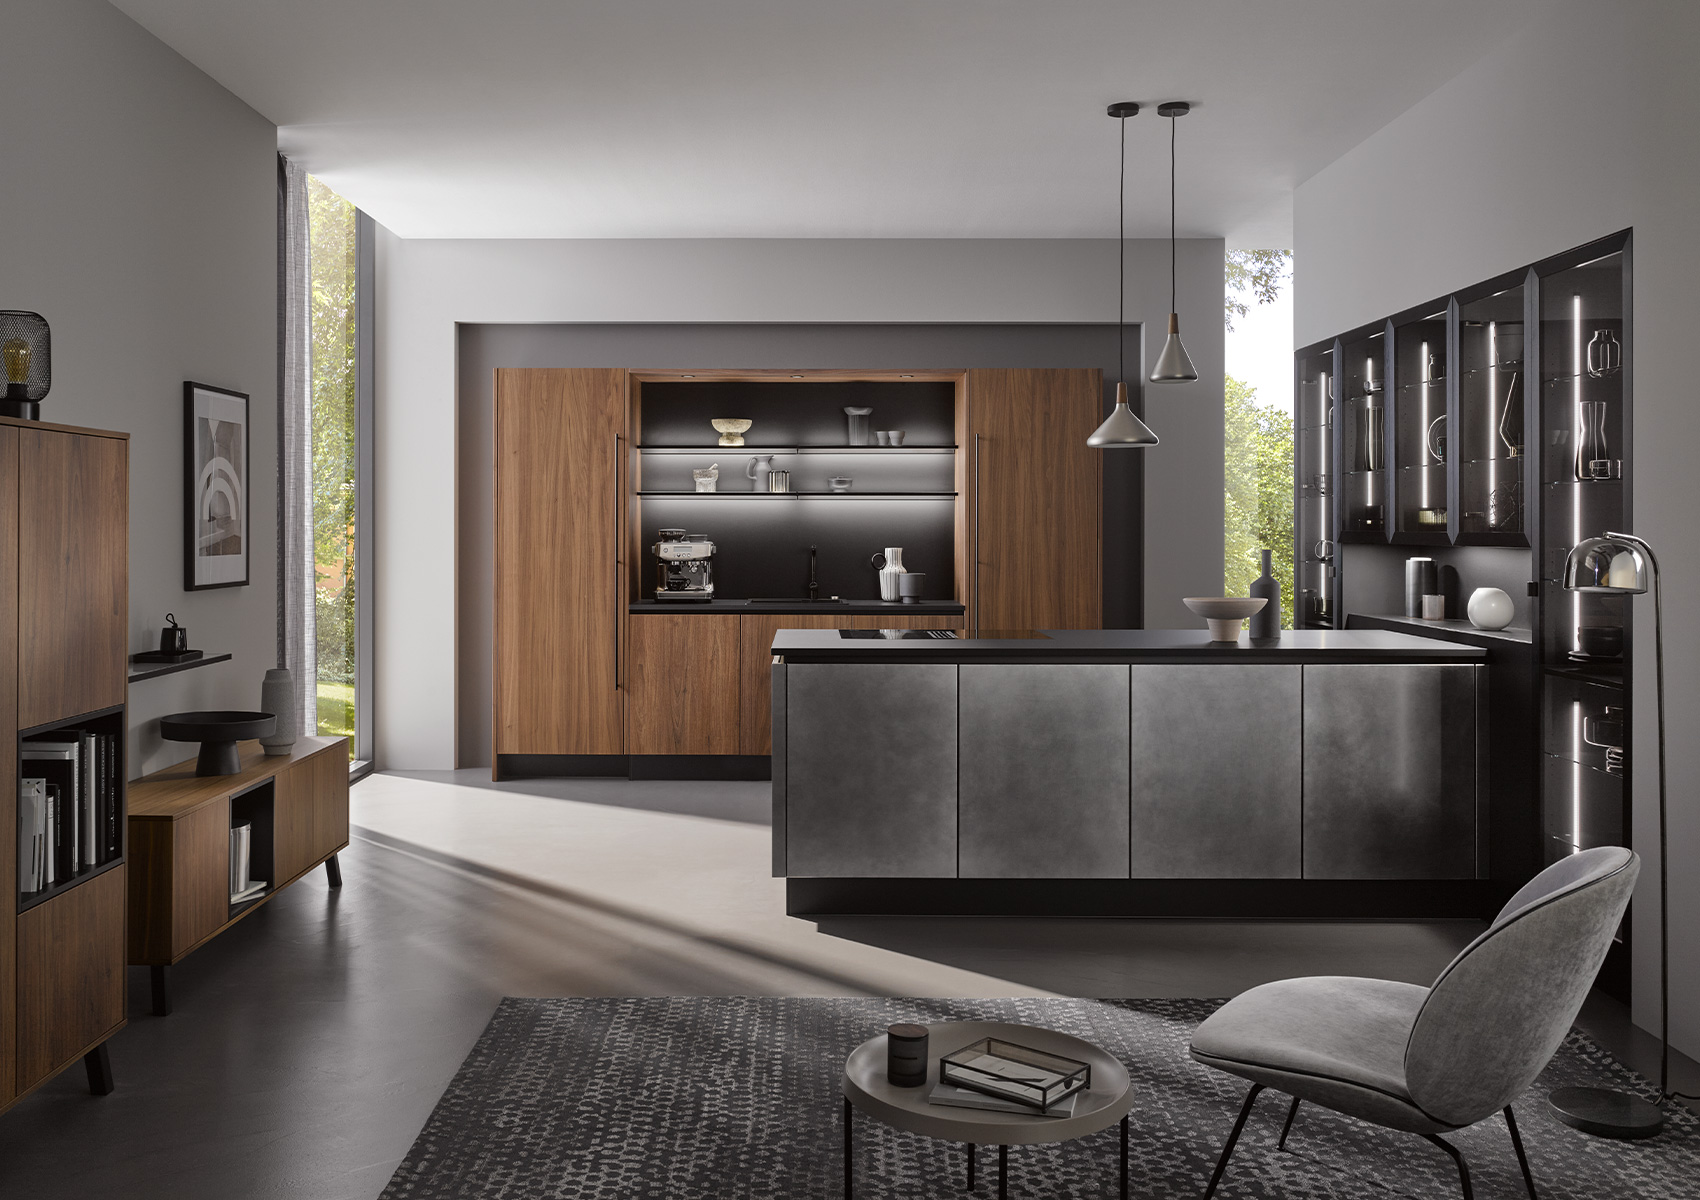 Modern kitchen in anthracite, brown and black